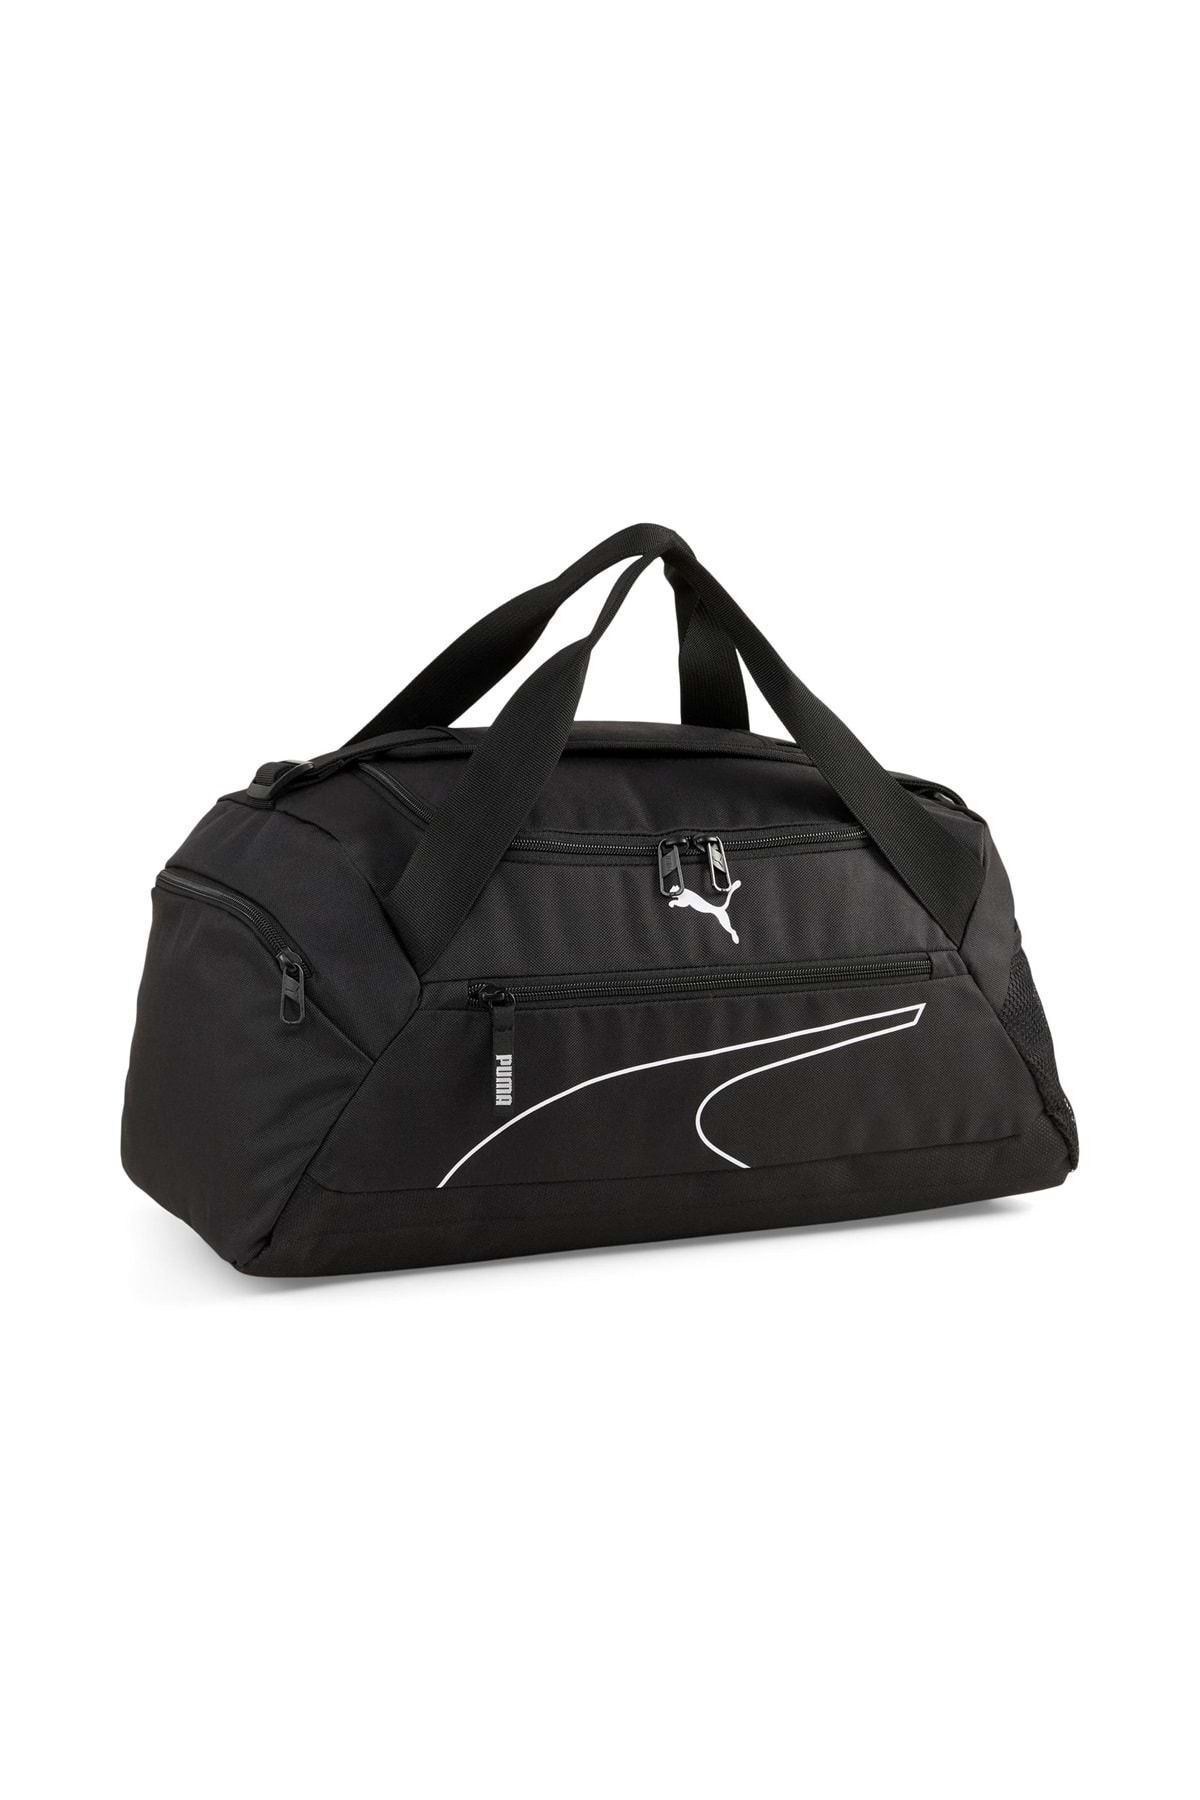 Puma 090331-01 Fundamentals Sports Bag S Unisex Spor Çanta Siyah